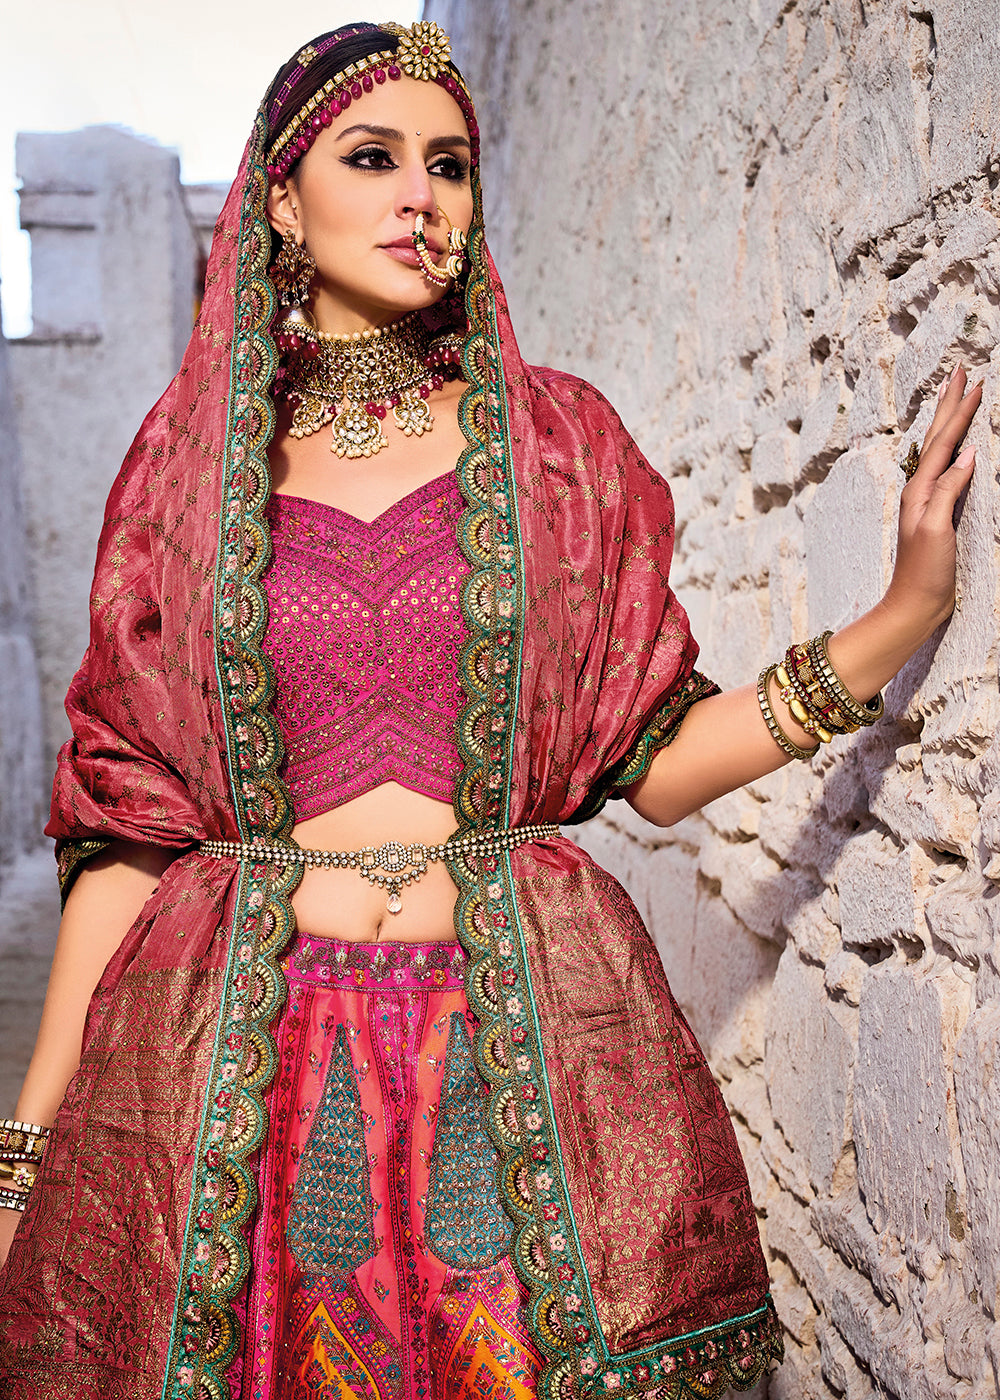 Buy Now Rani Pink Designer Style Embroidered Traditional Lehenga Choli Online in USA, UK, Canada & Worldwide at Empress Clothing.